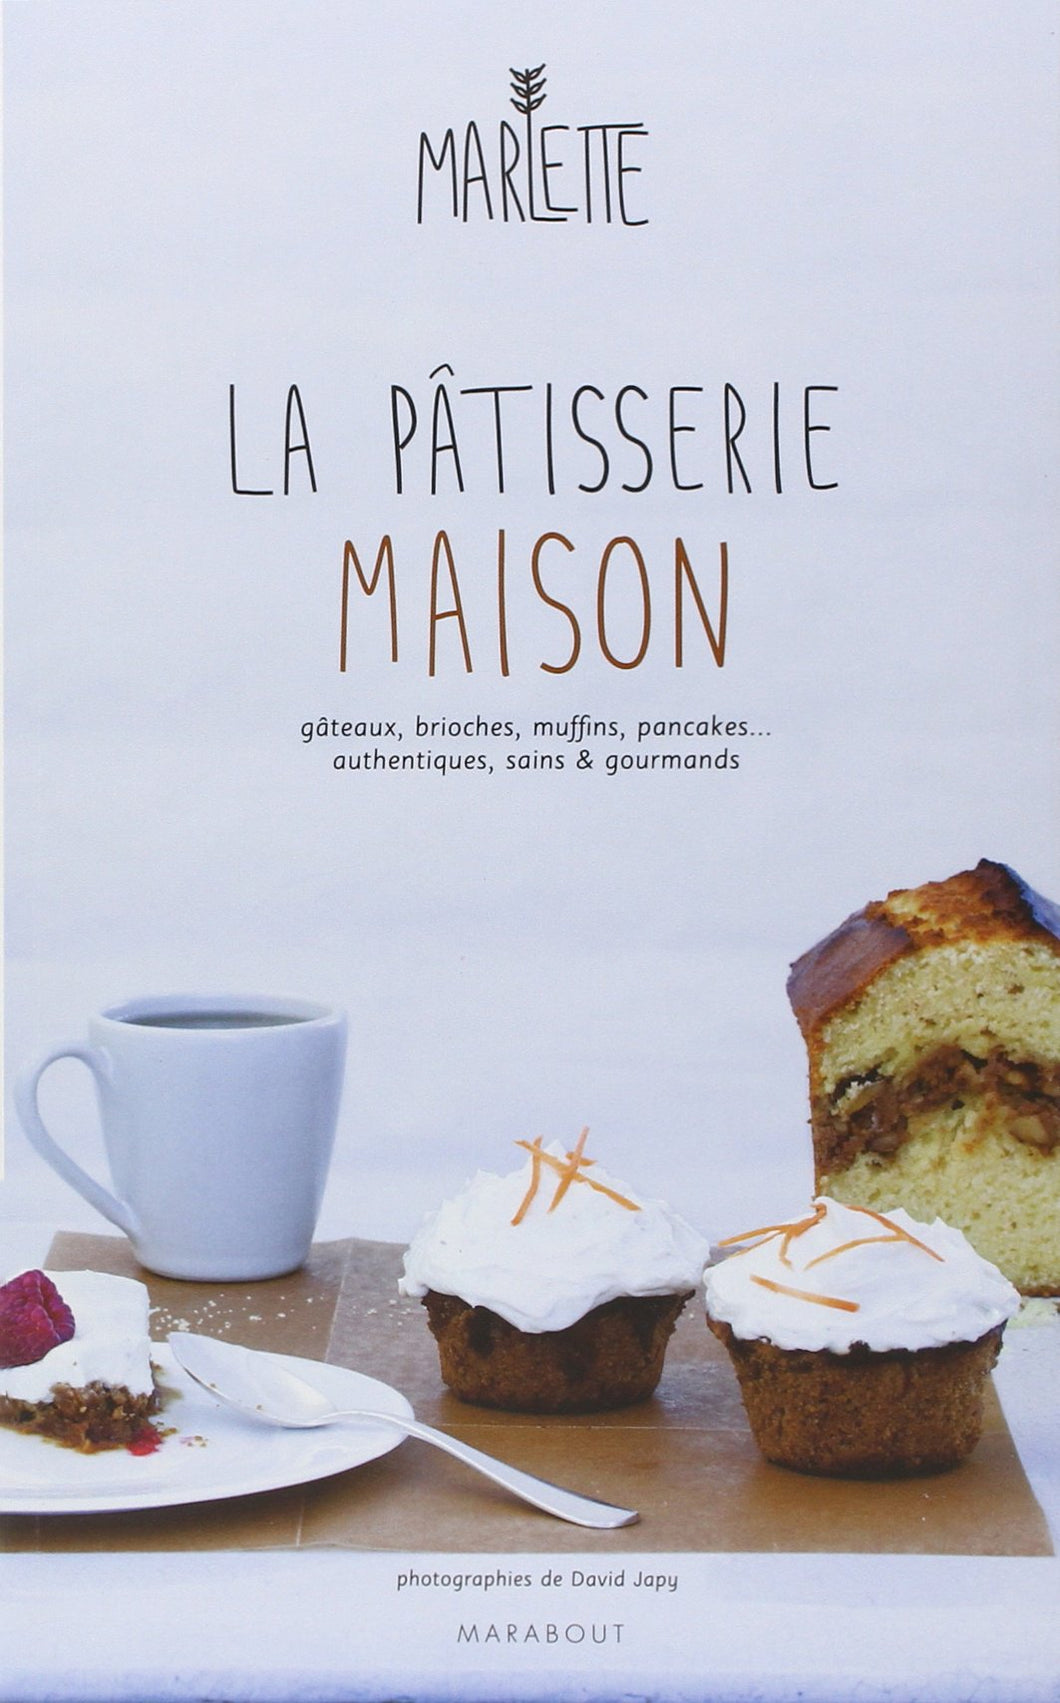 La Patisserie Maison by Marlette